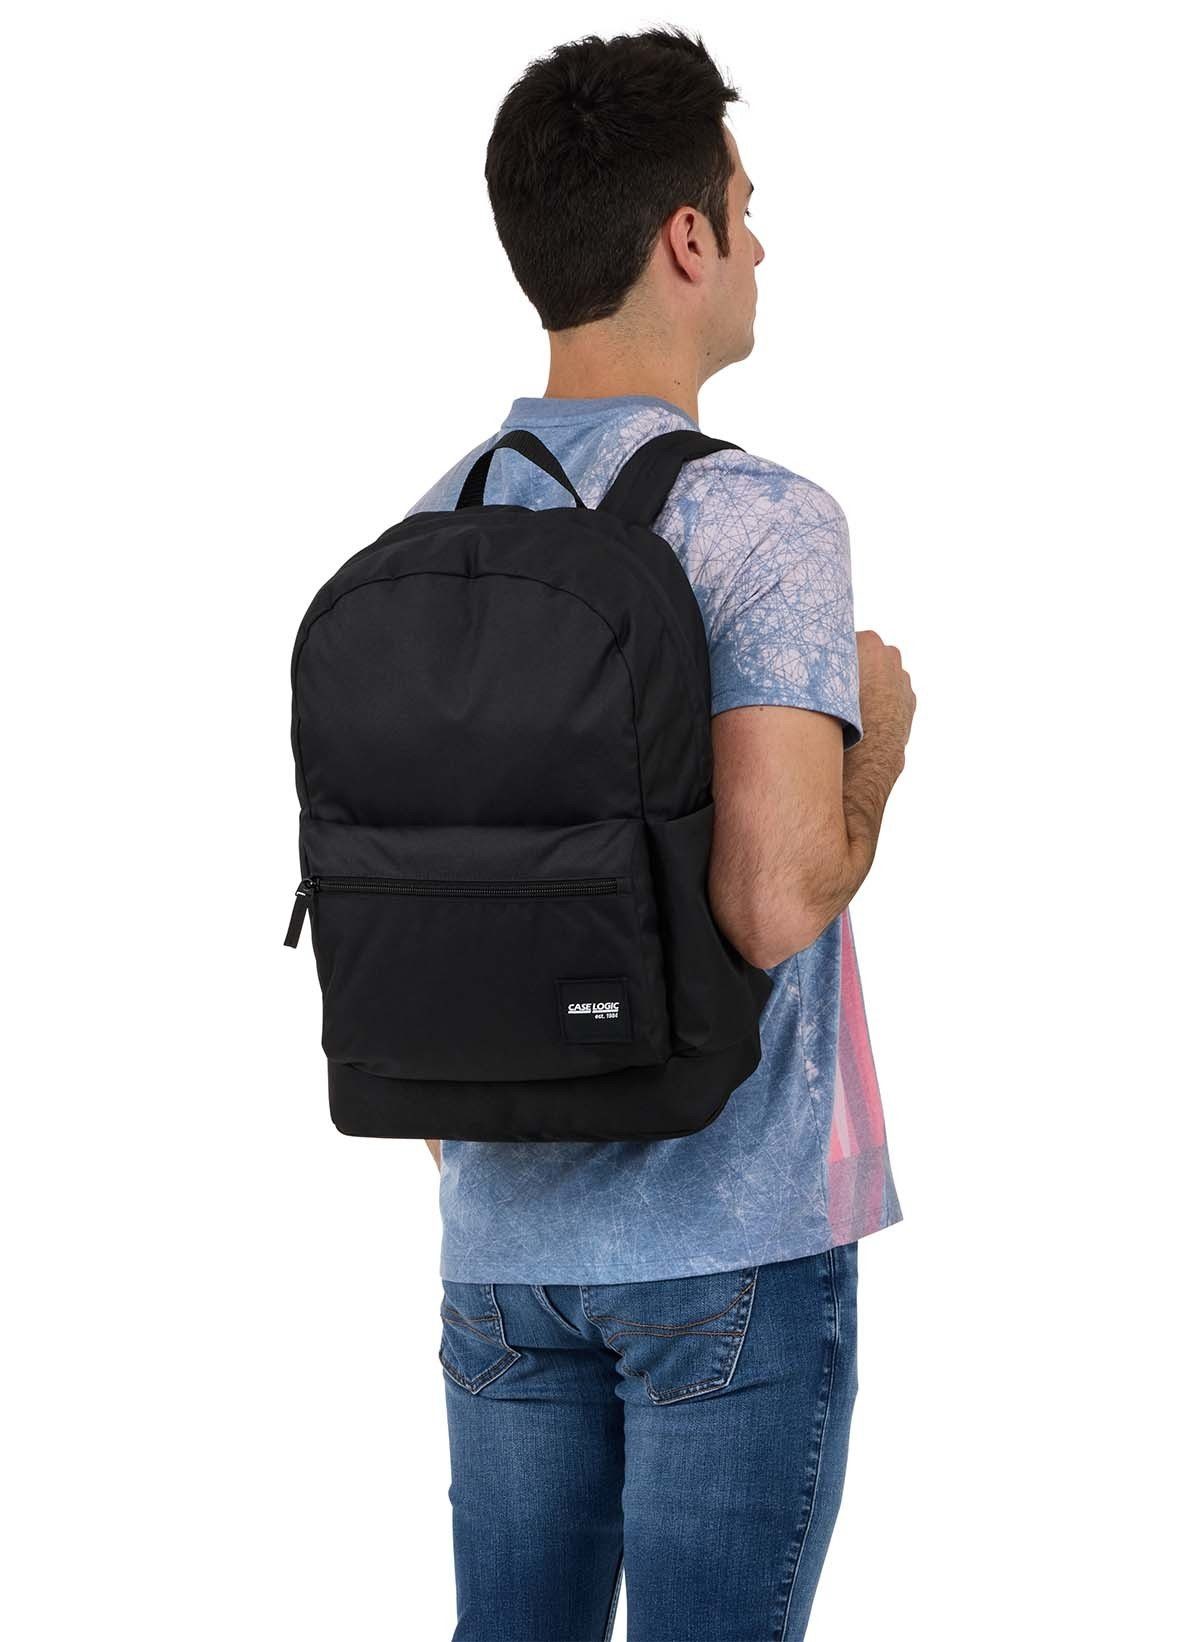 Case Logic Notebookrucksack Case Black Logic Backpack Recycled Commence